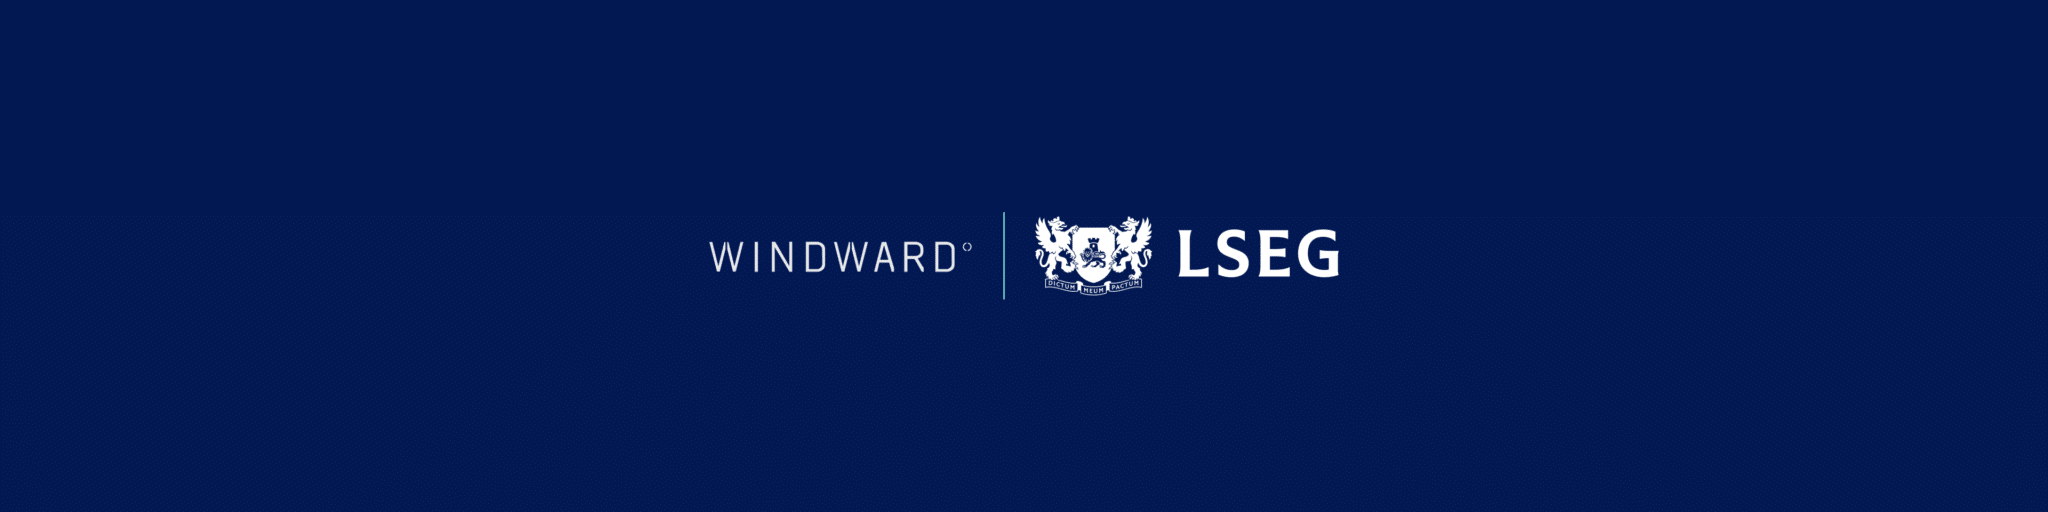 LSEG Partnership